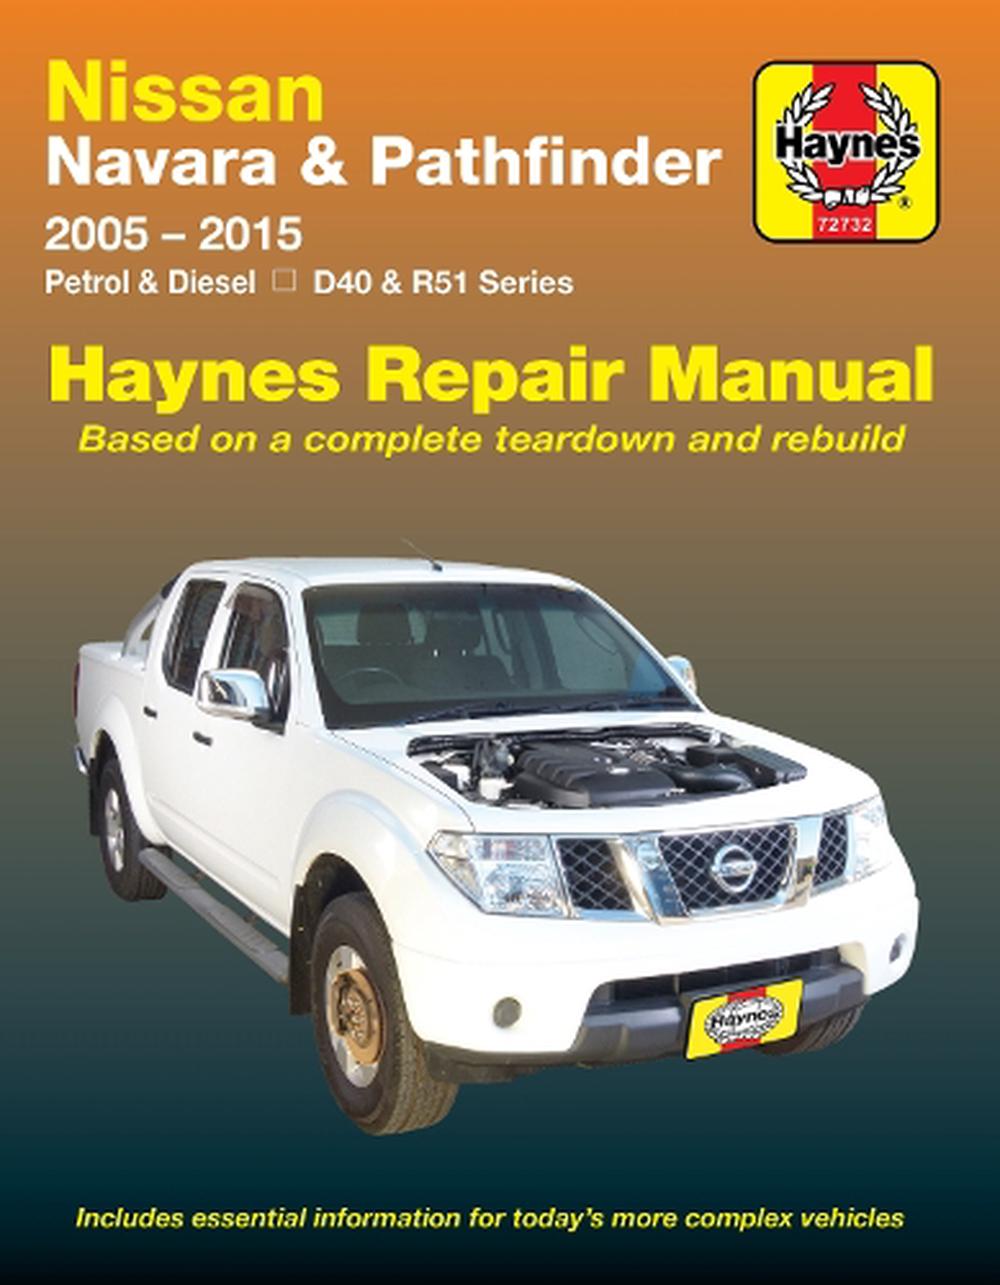 Nissan Navara pickup review (2005-2015)